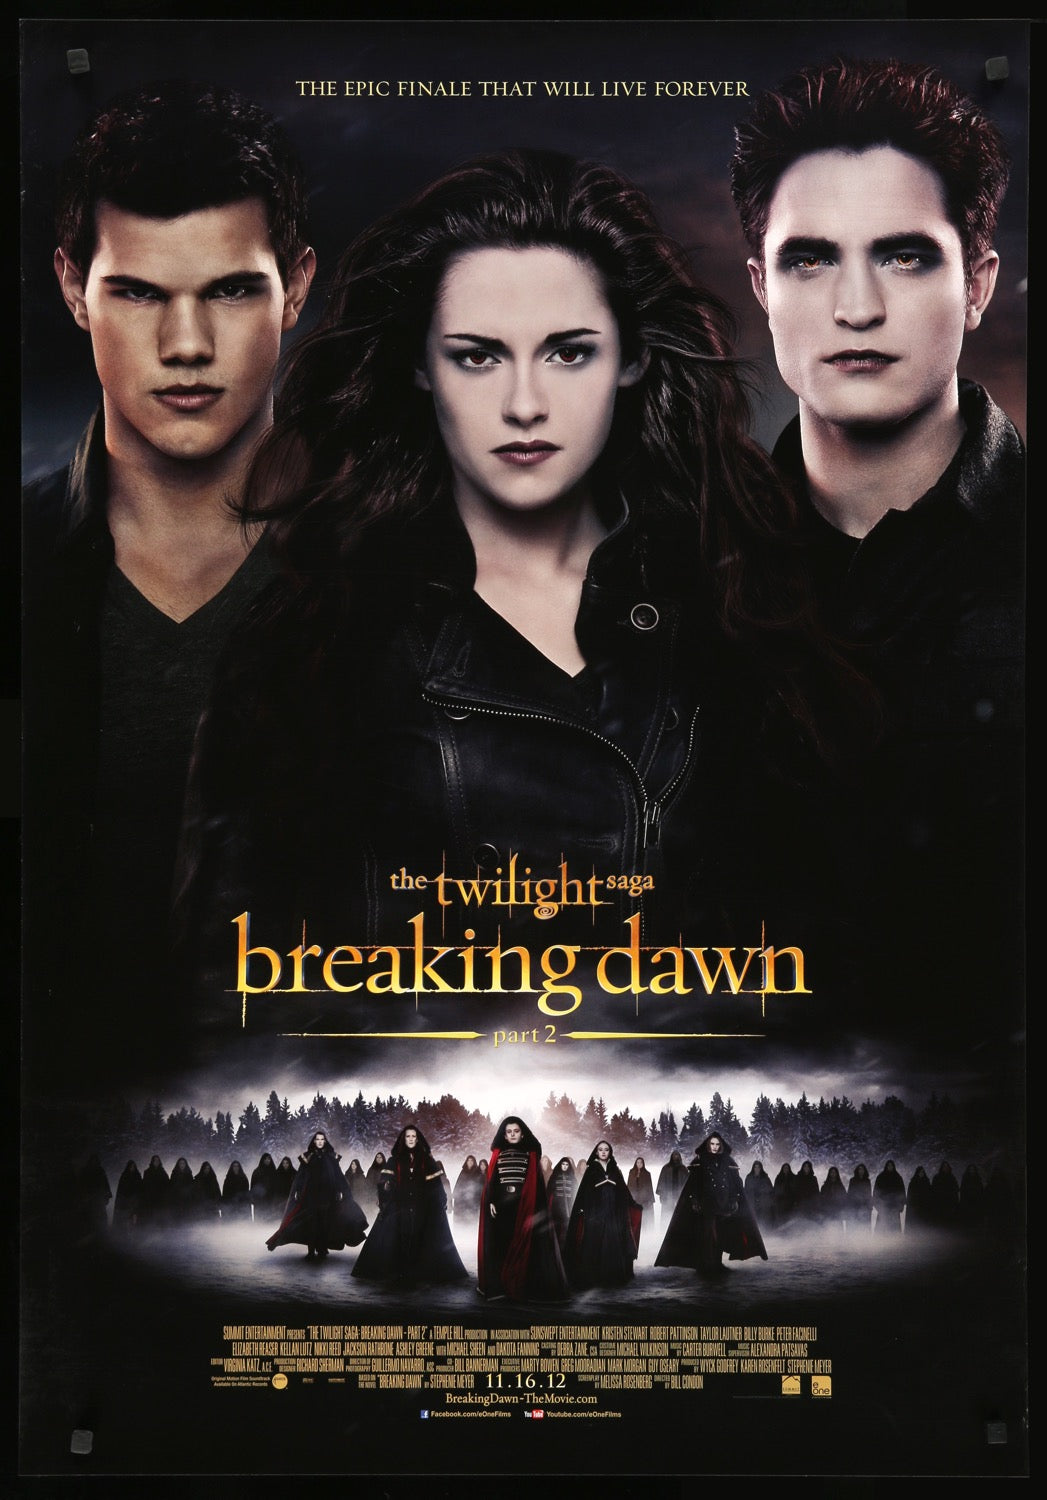 Twilight Saga - Breaking Dawn - Part 2 (2012) original movie poster for sale at Original Film Art